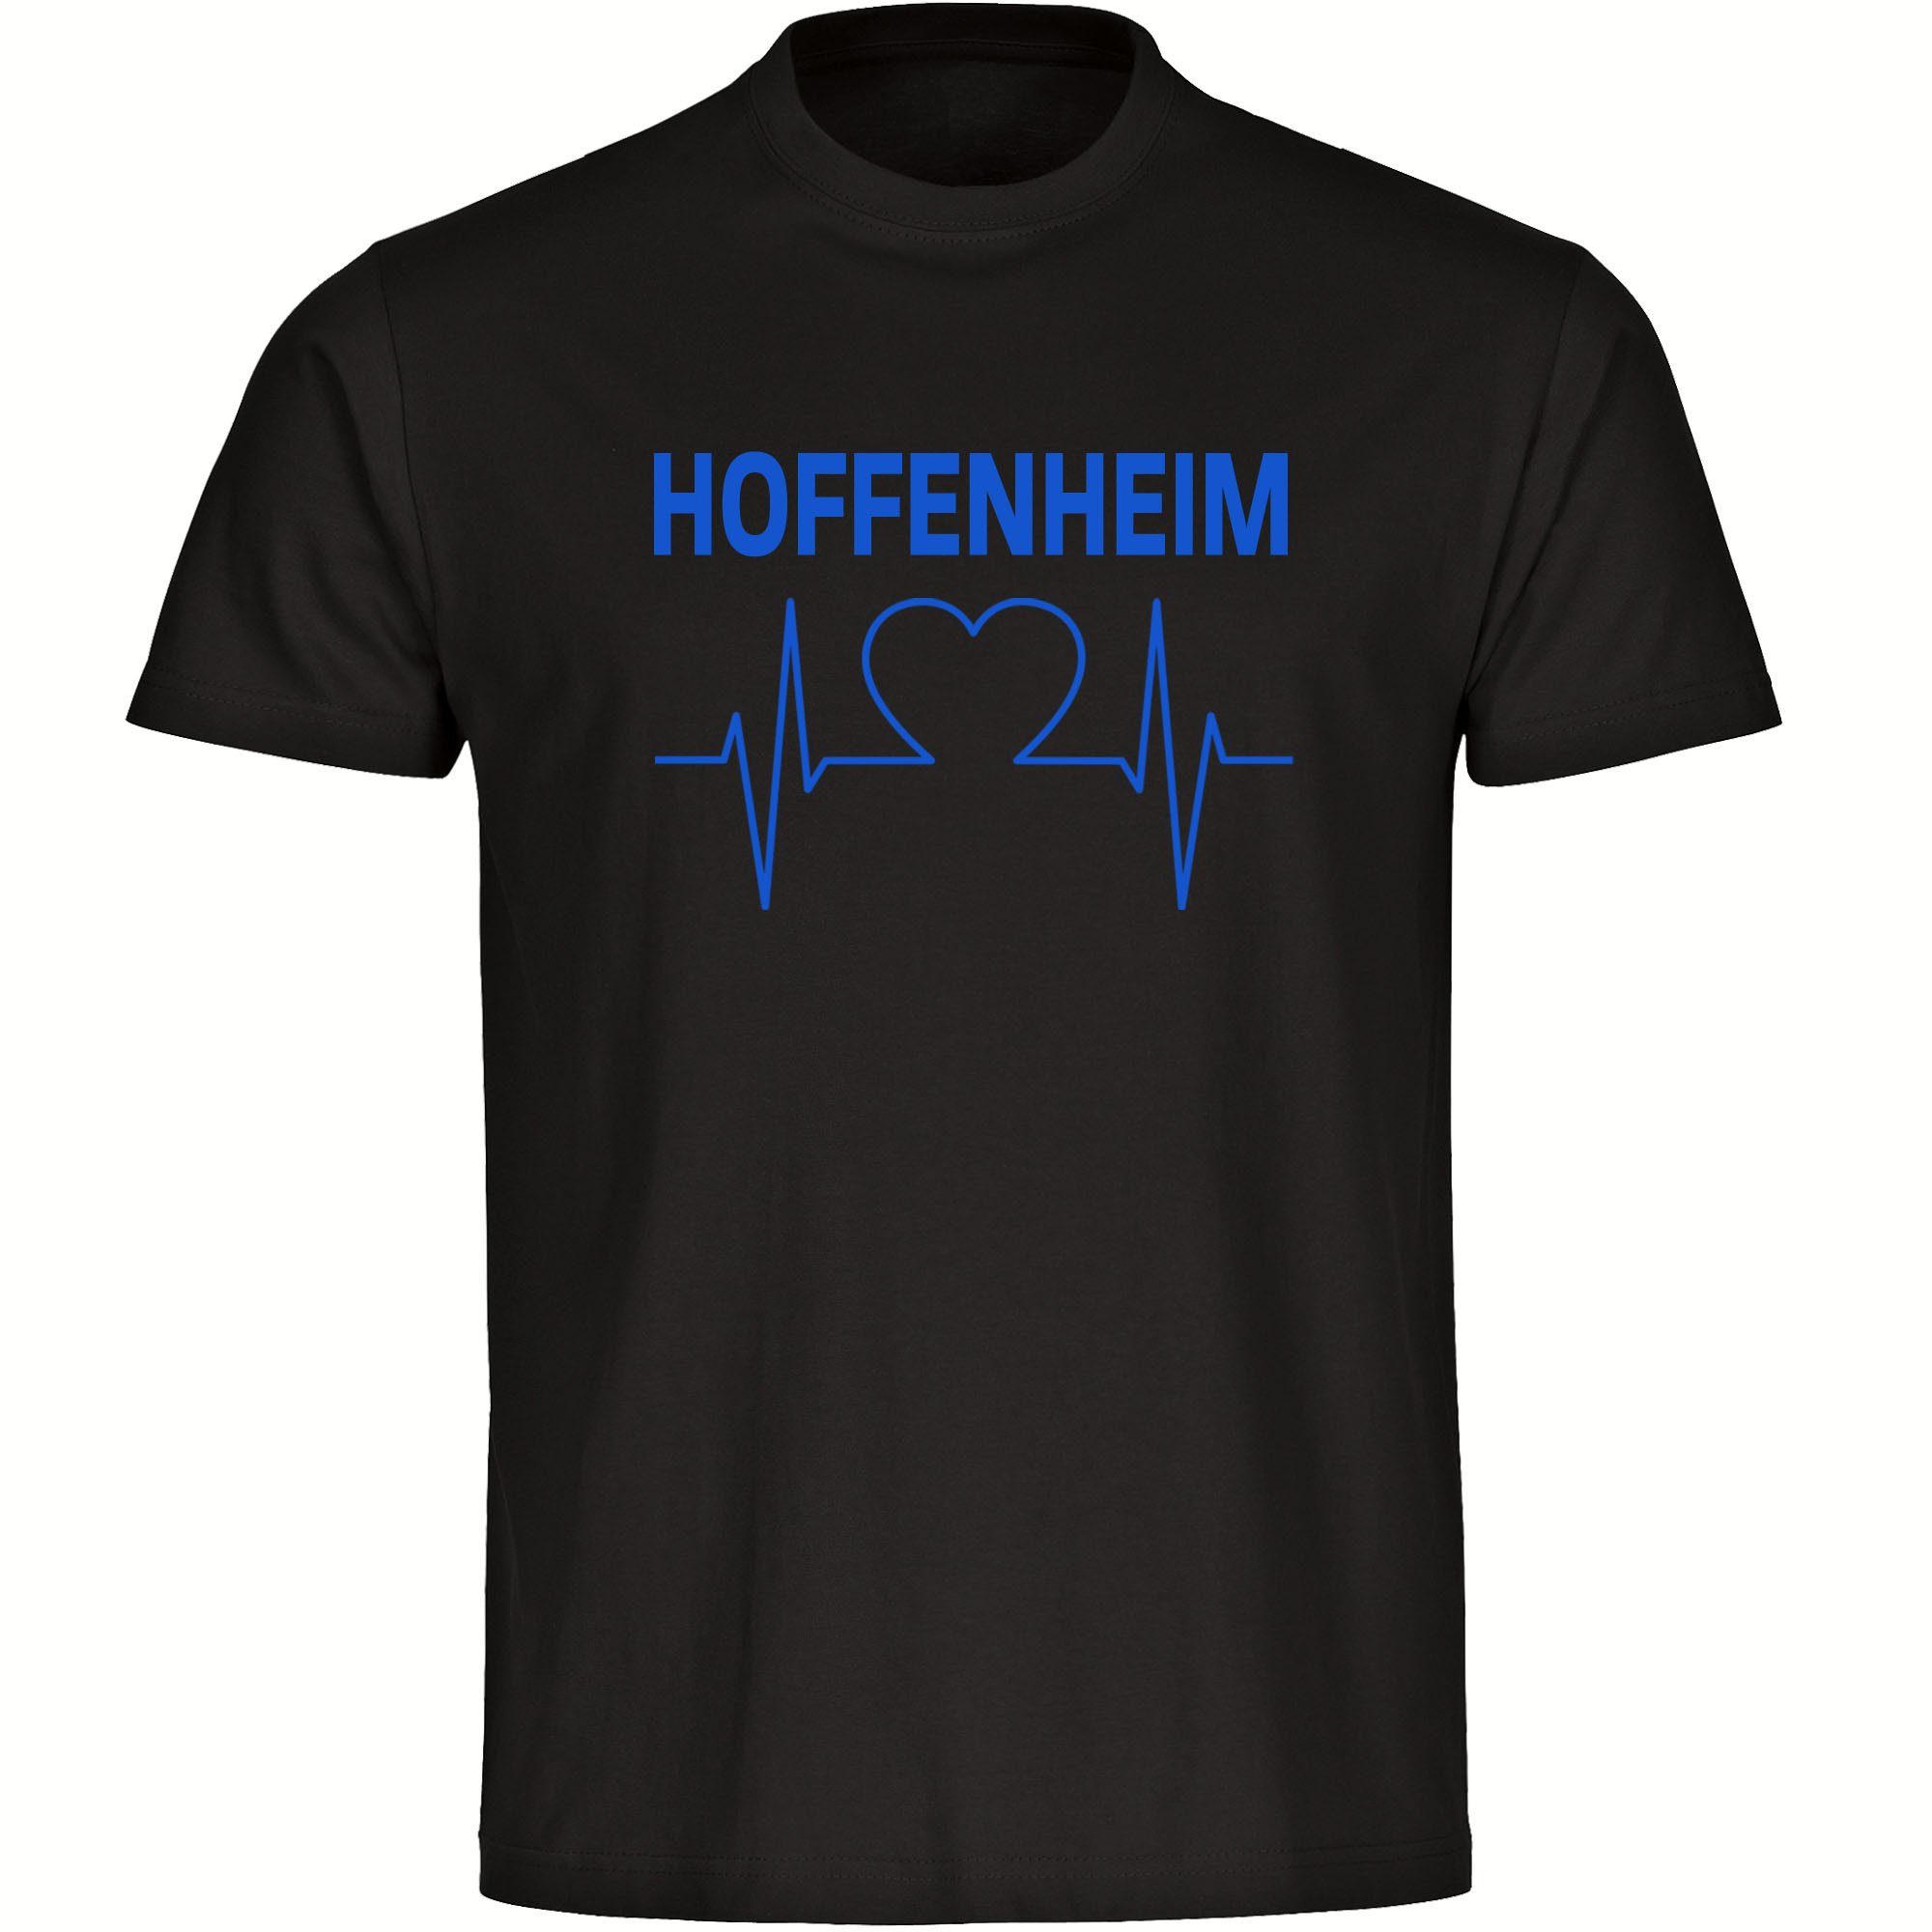 multifanshop T-Shirt Kinder Hoffenheim - Herzschlag - Boy Girl